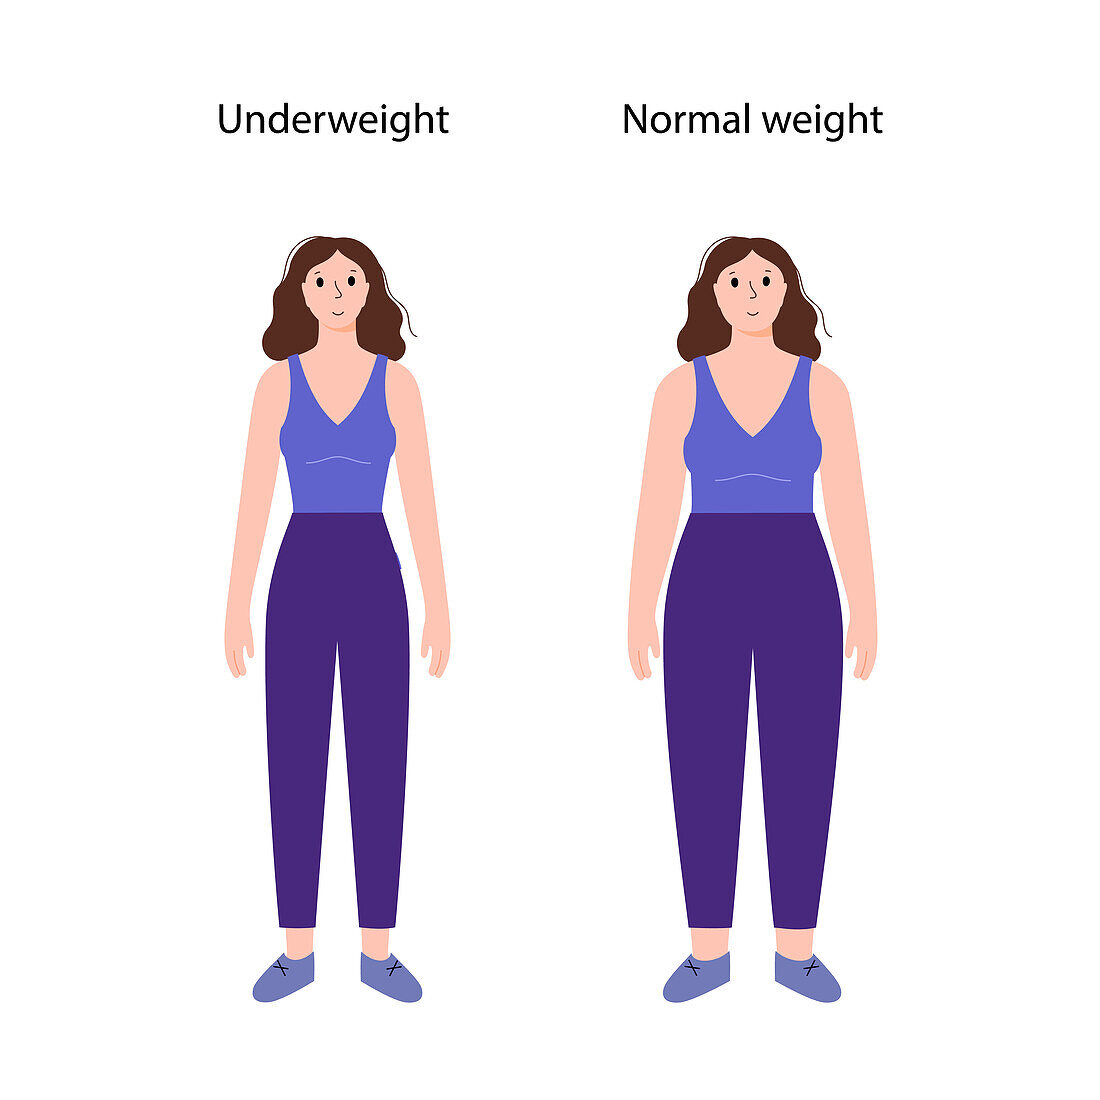 Underweight woman, illustration